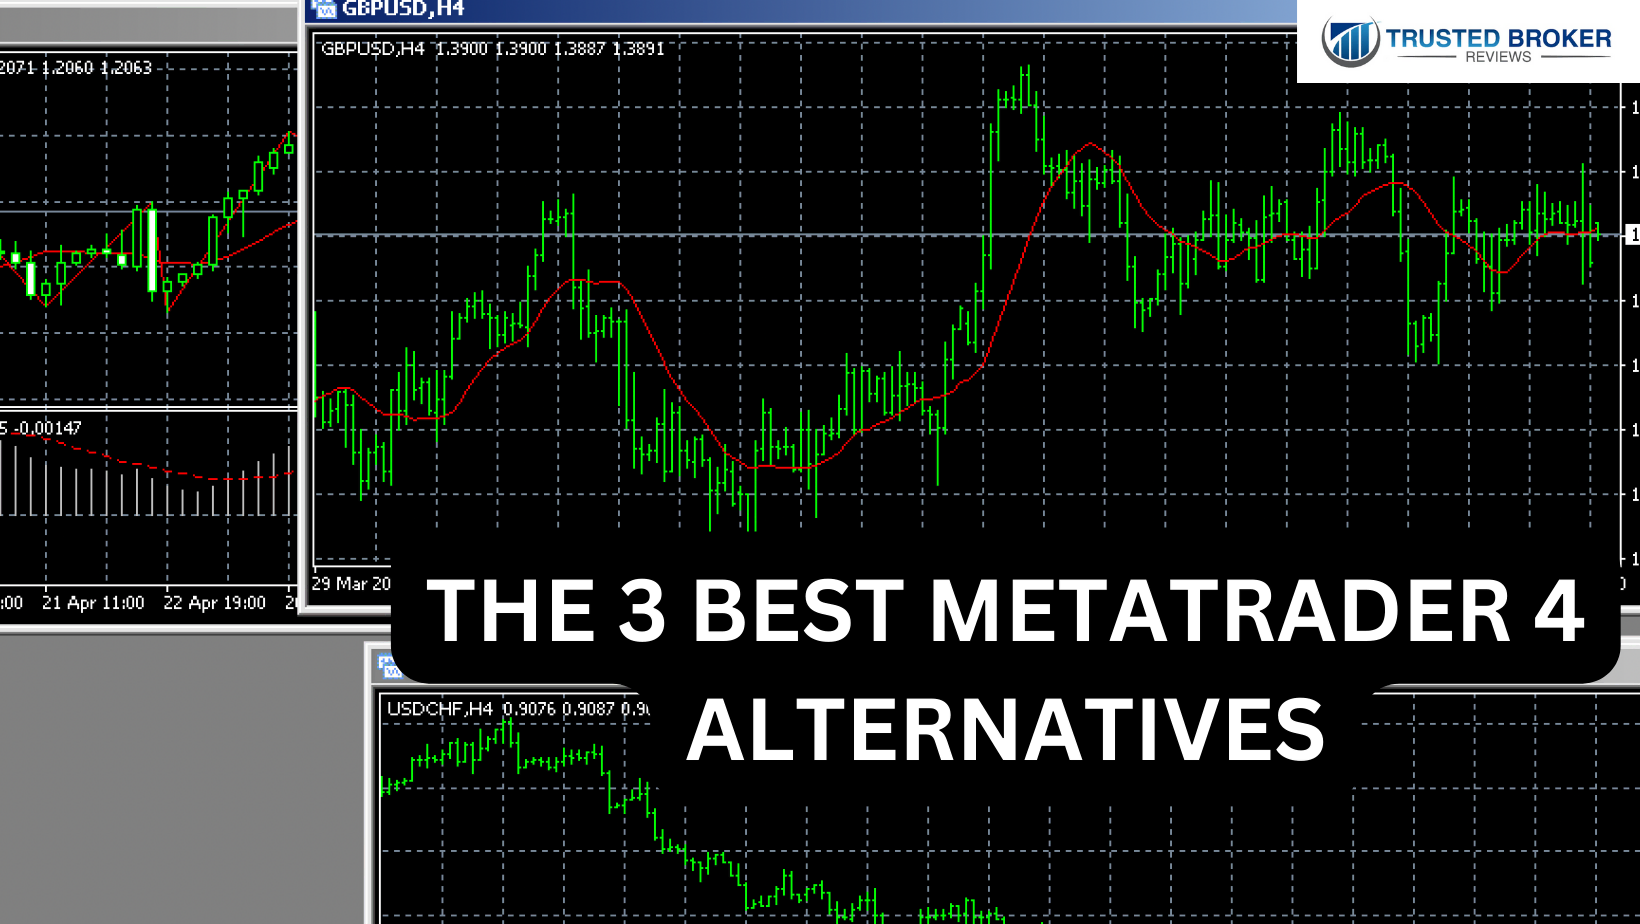 The best MetaTrader 4 alternatives in comparison